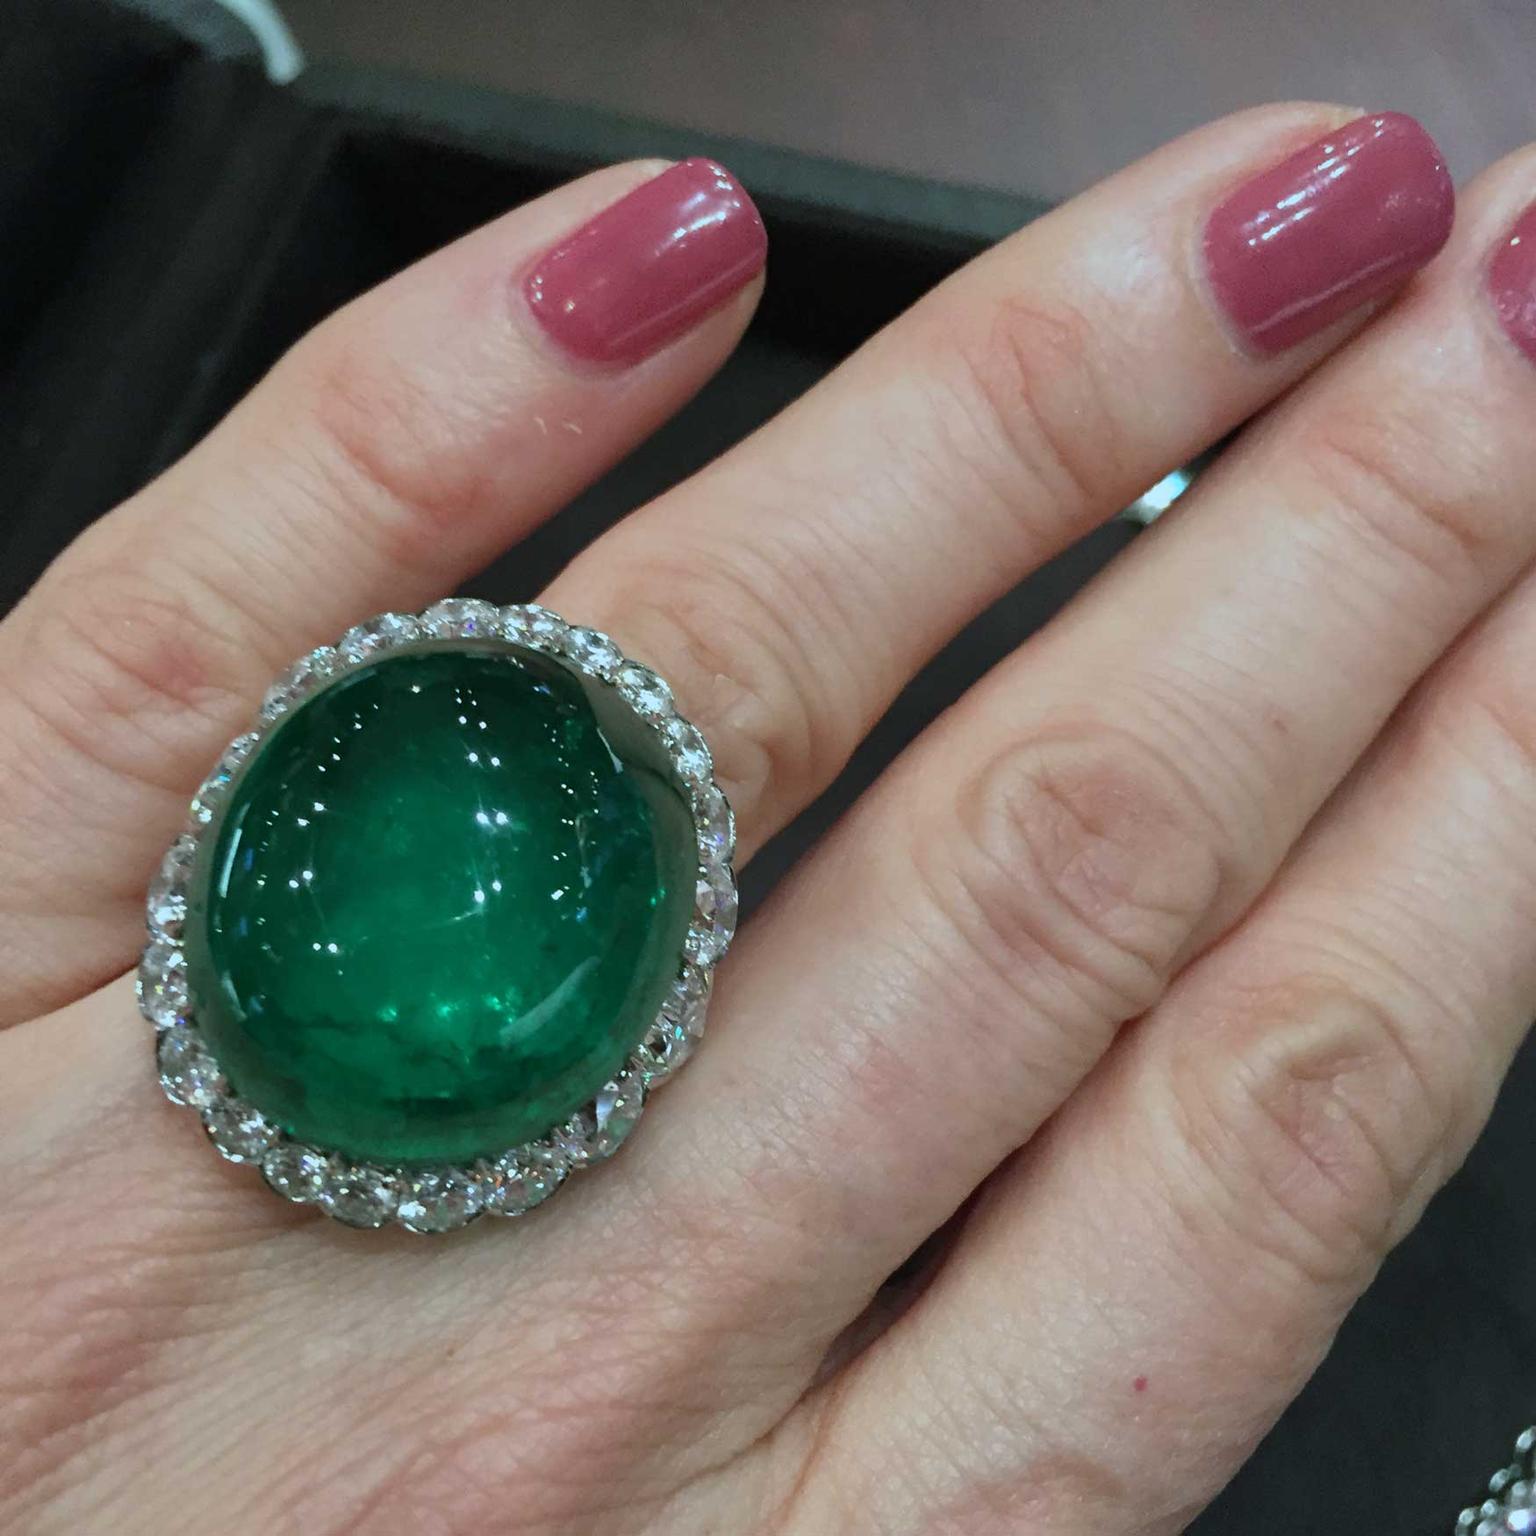 Bayco 32.39 carat emerald cabochon ring